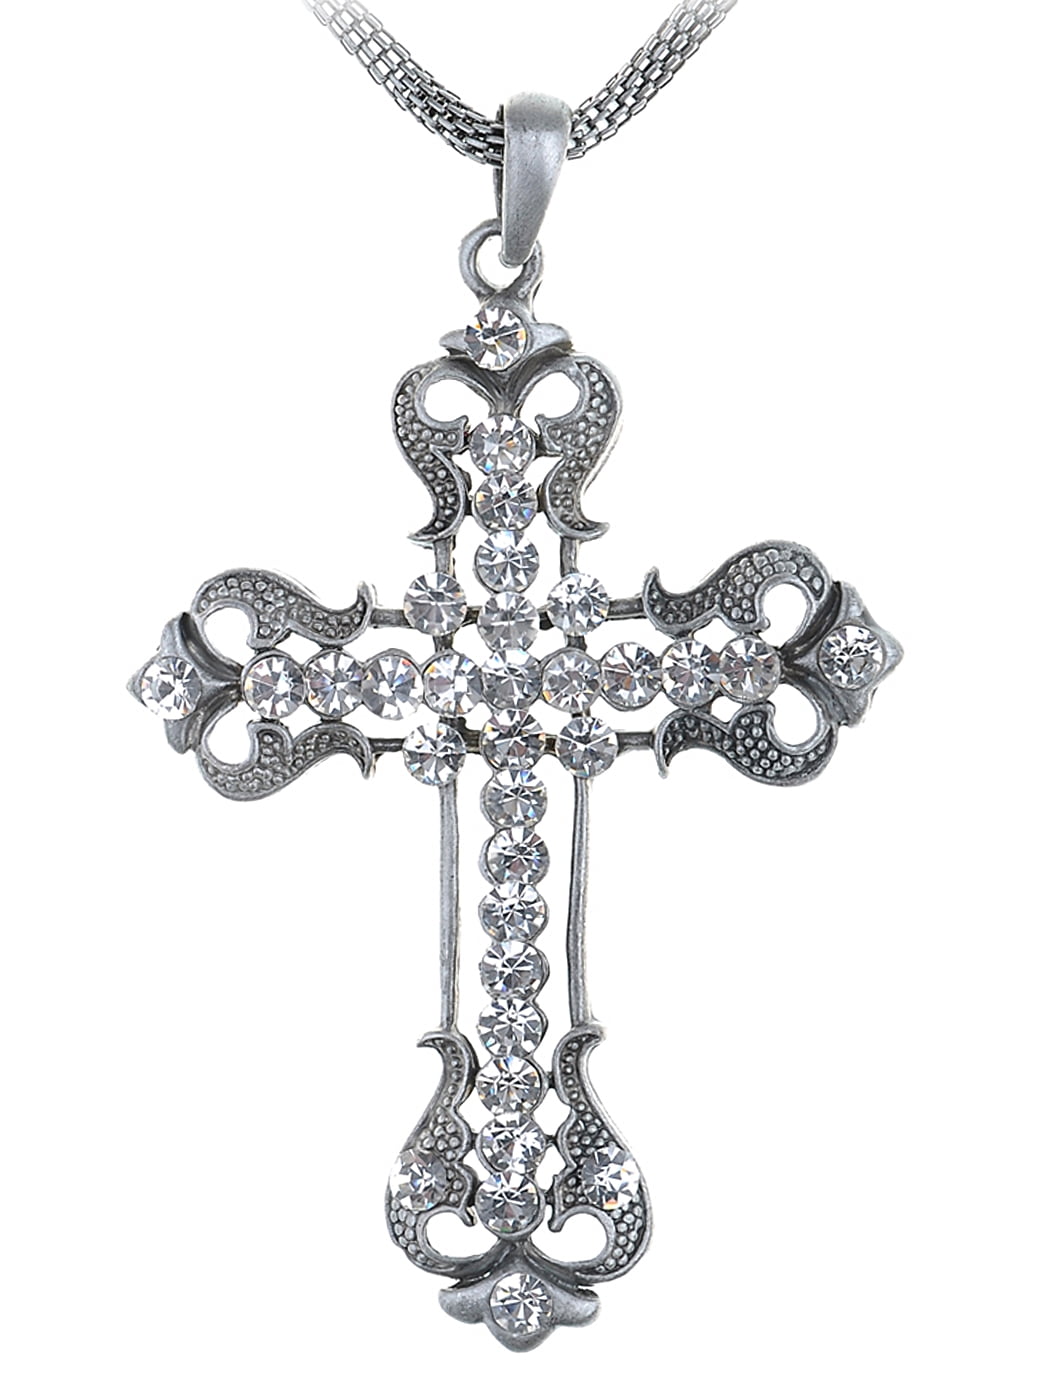 Silver Rhinestone Cross Necklace from Brandy Melville | Cross necklace, Cross  necklace silver, Rhinestone cross